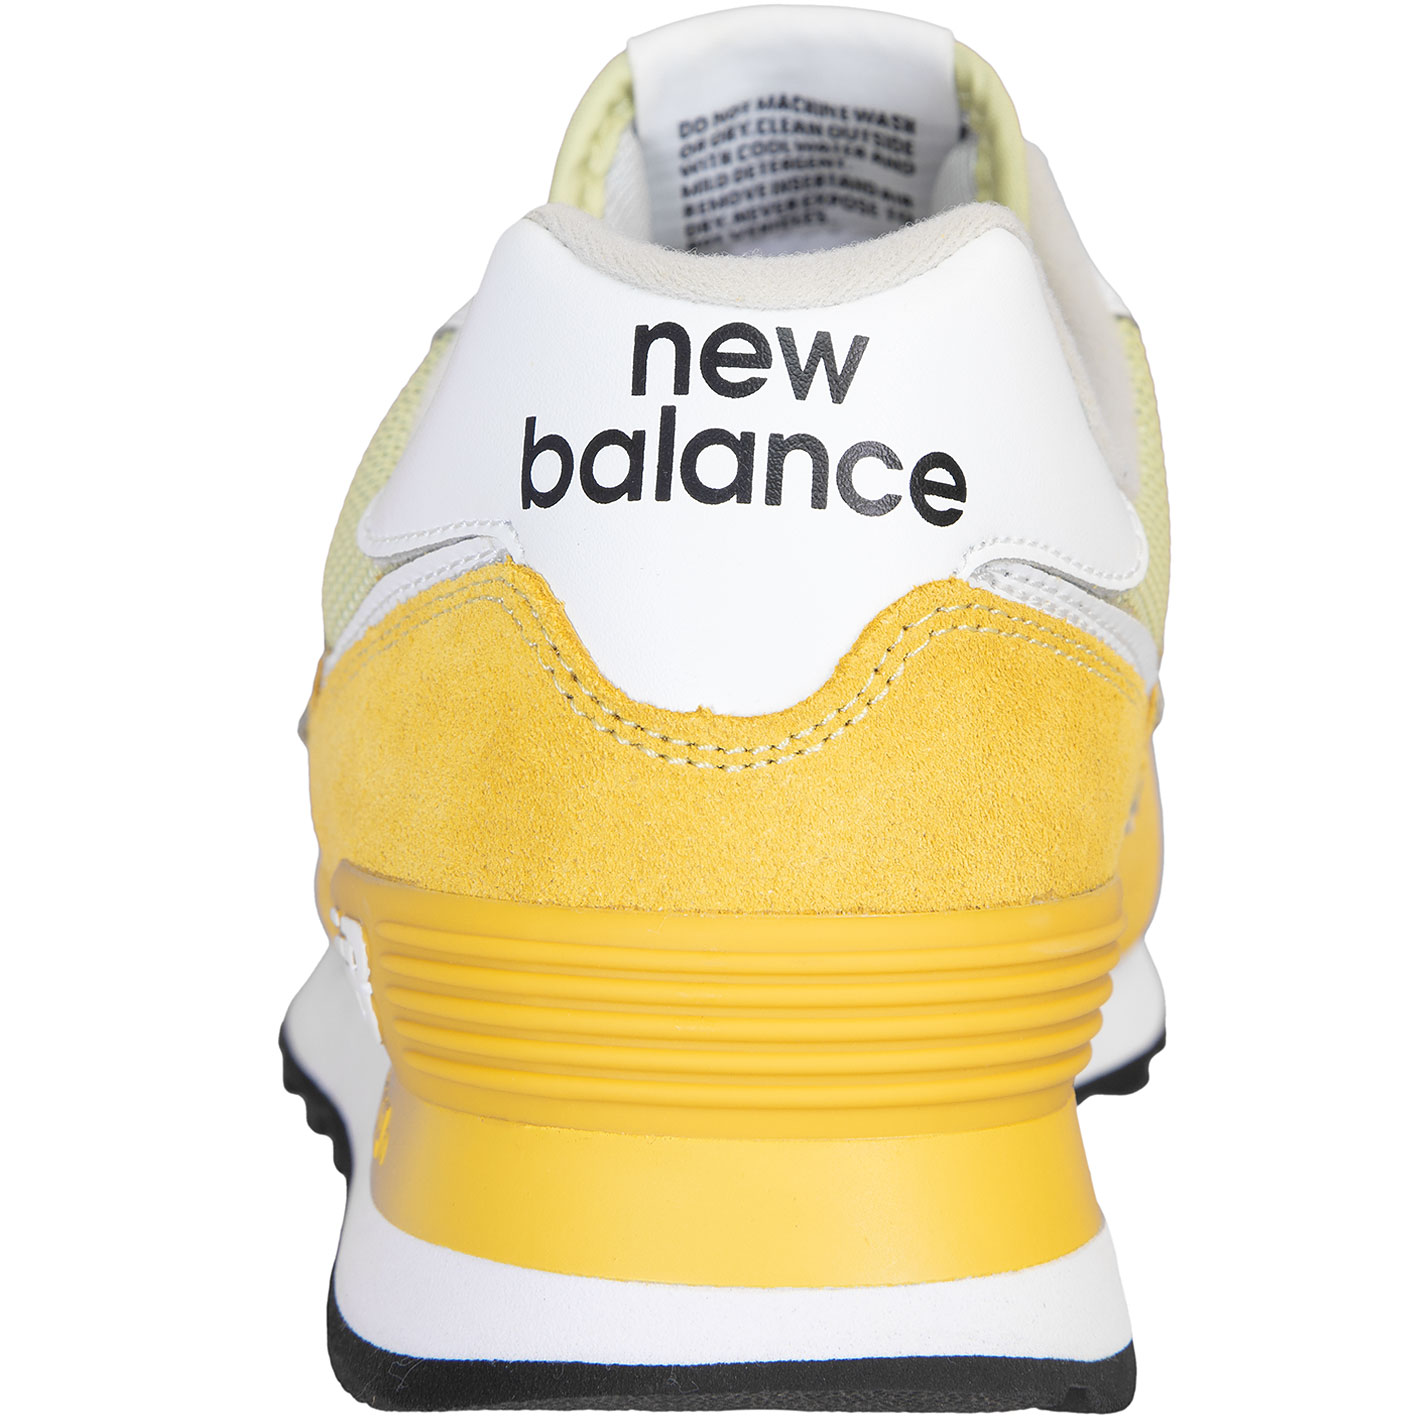 Samenwerking Hoofdstraat Pest ☆ Sneaker New Balance 574 gelb - hier bestellen!